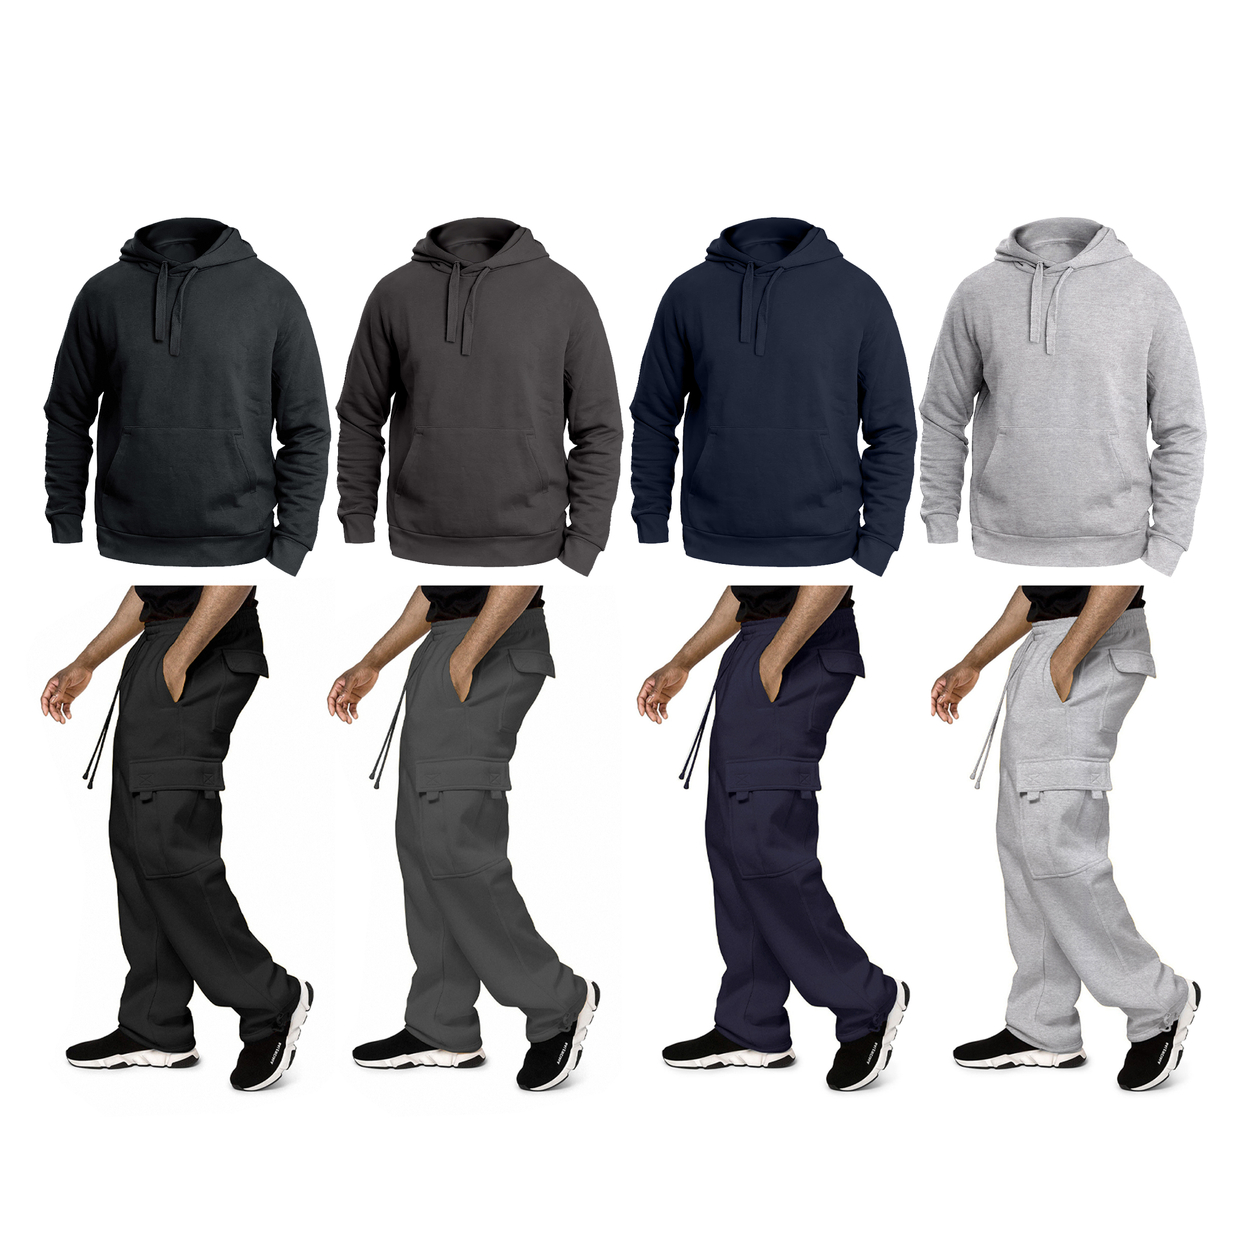 Men's Big & Tall Winter Warm Cozy Athletic Fleece Lined Multi-Pocket Cargo Sweatsuit - Charcoal, Medium